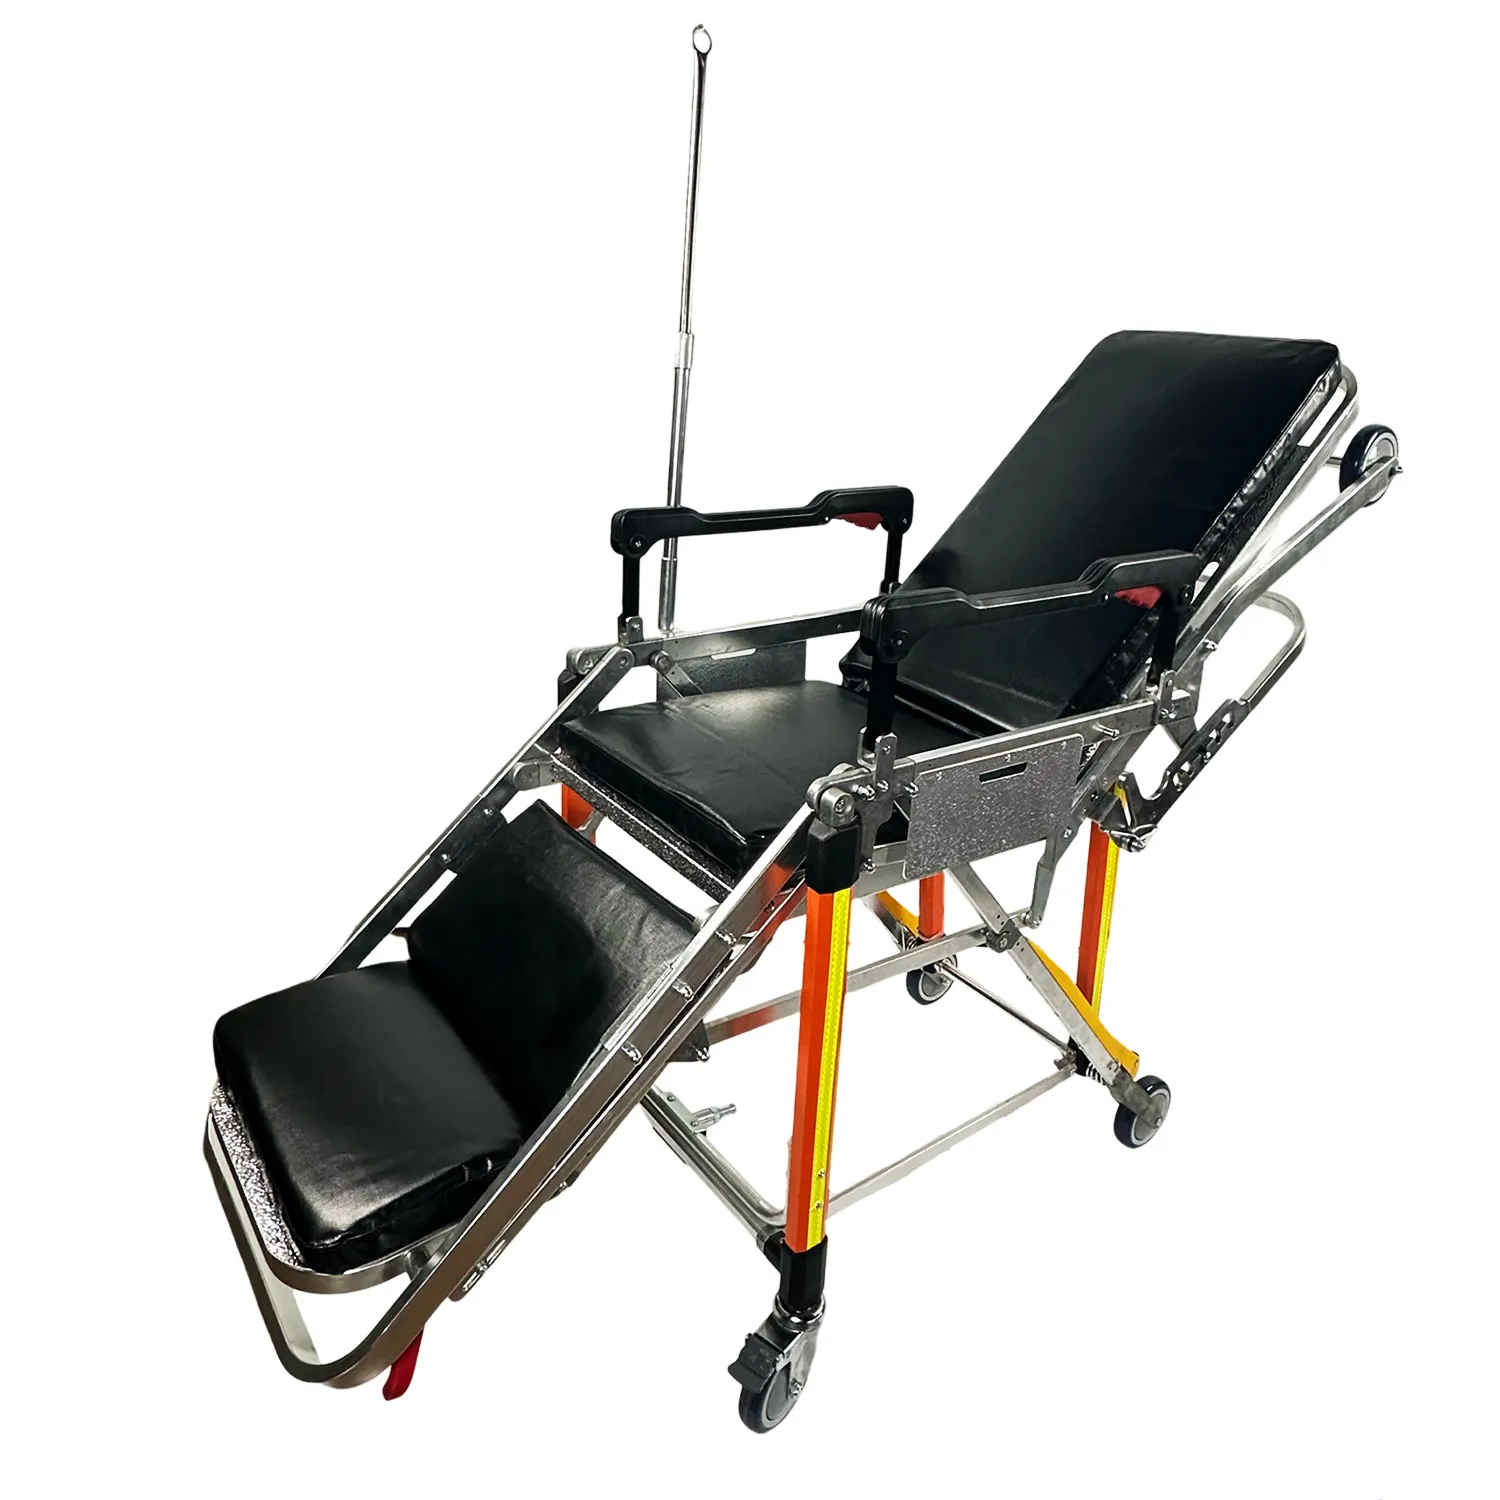 Stretcher Factory Wholesale Hospital Stretcher Chair Emergency Ambulance Stretchers To Transport Patient